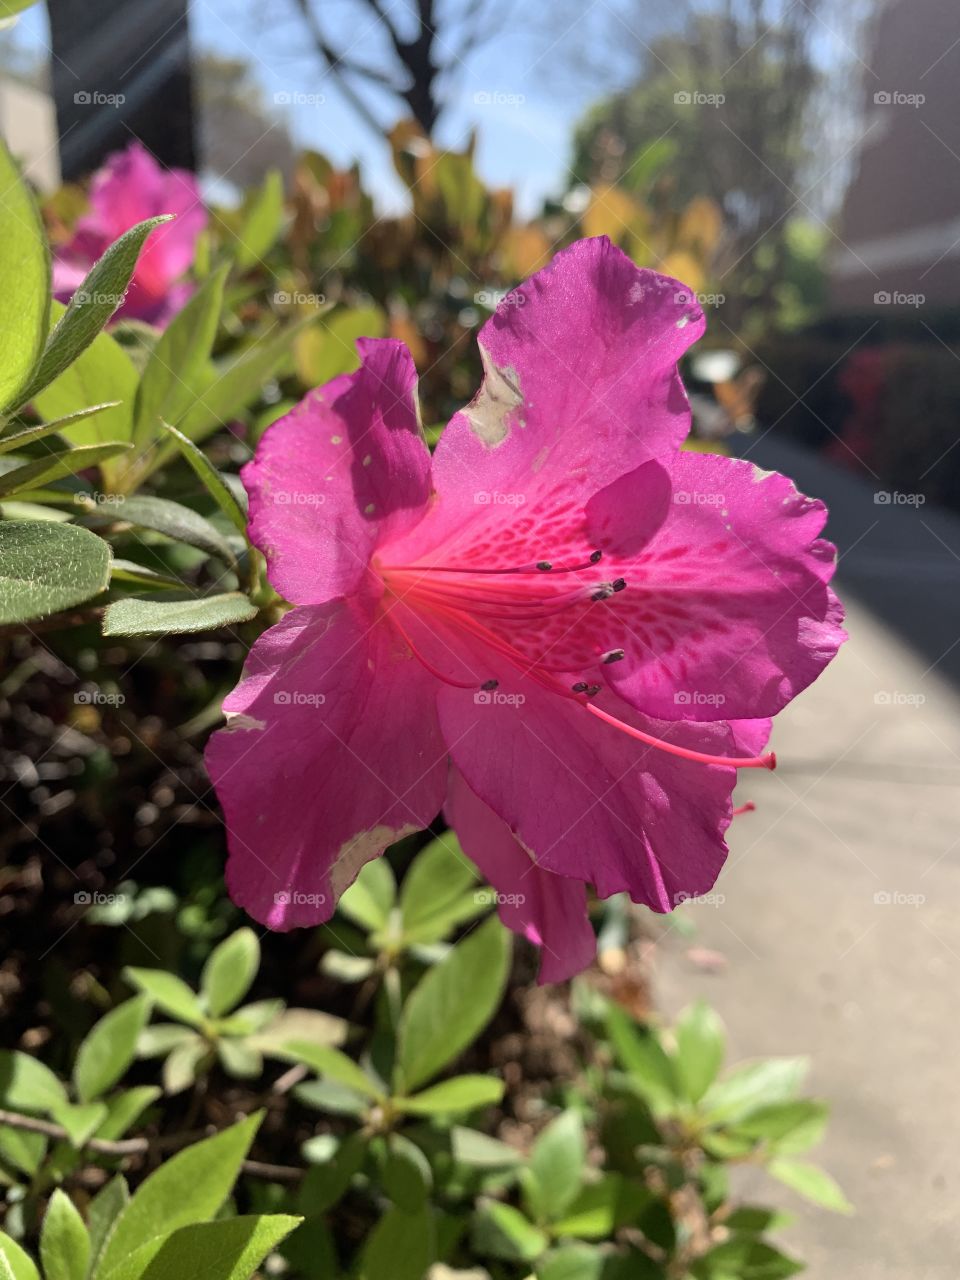 A pretty pink flower